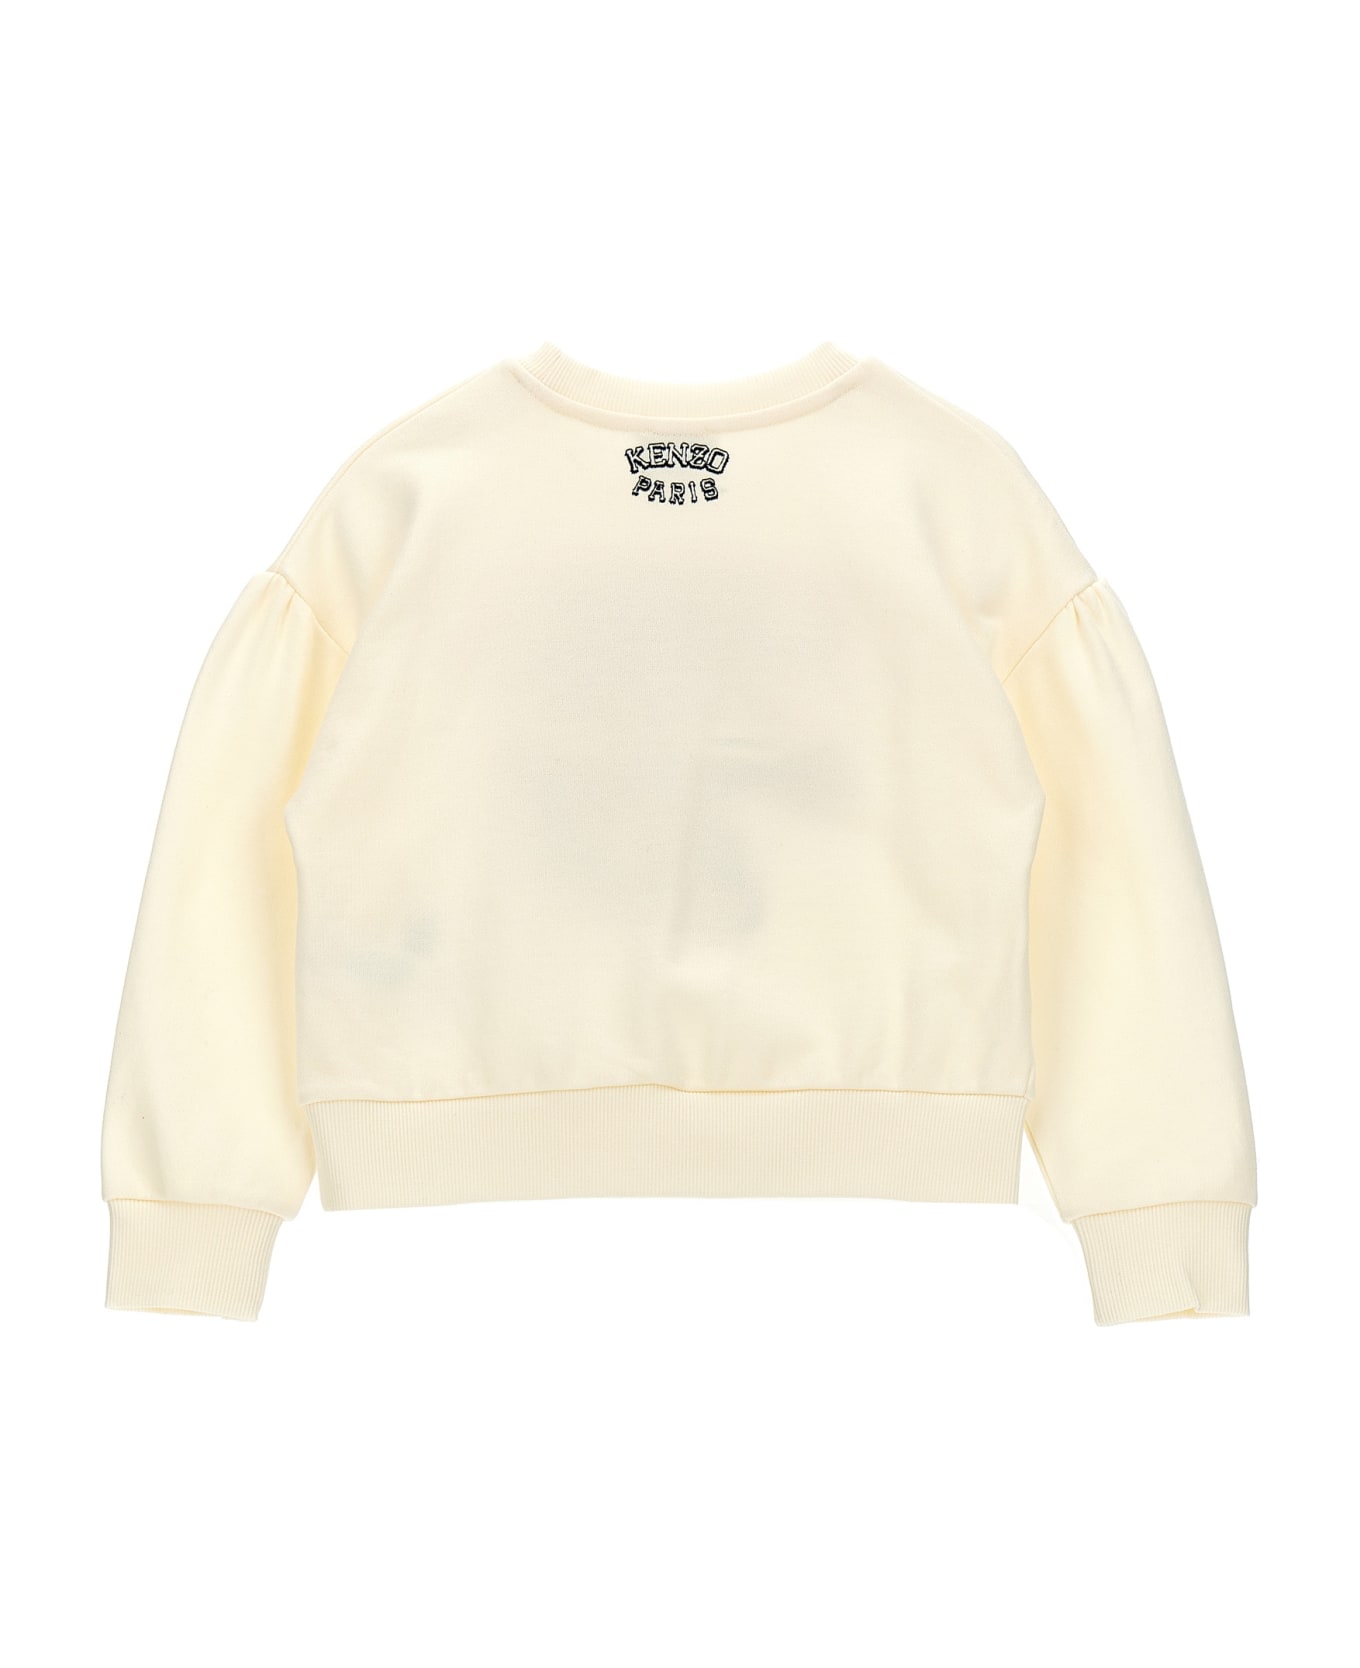 Kenzo Kids Logo Embroidery Sweatshirt - White